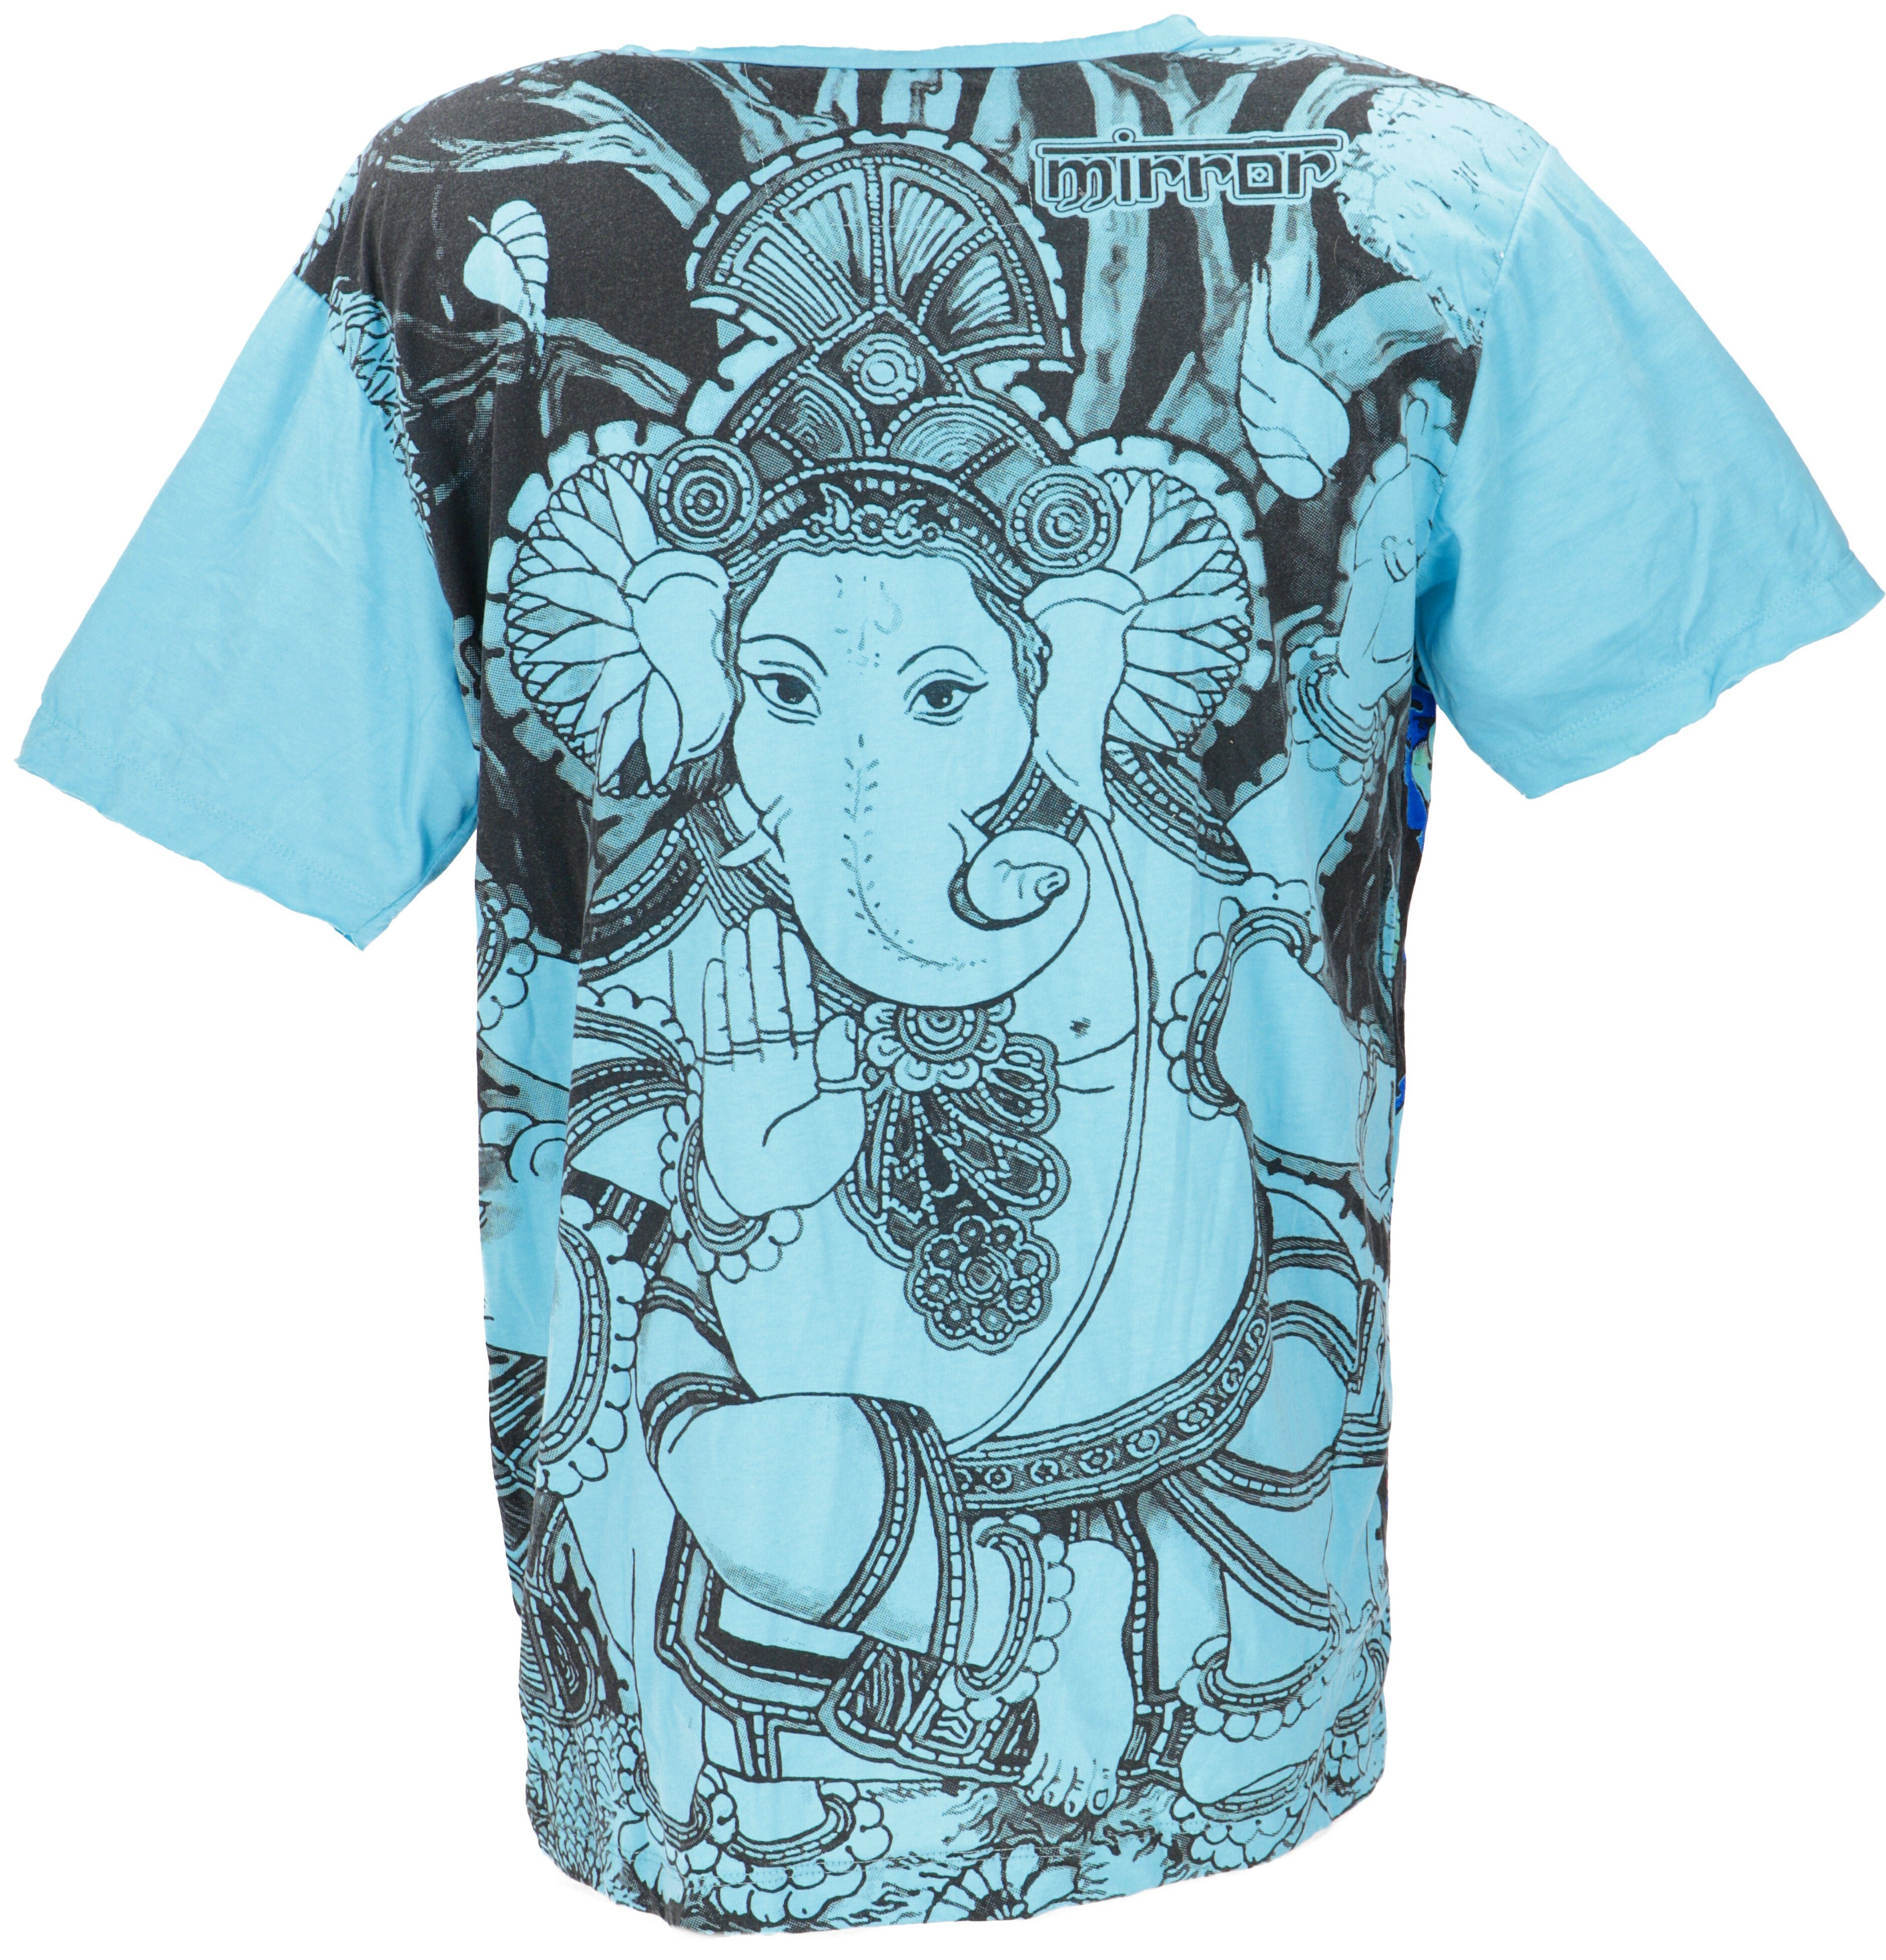 Guru-Shop T-Shirt Mirror alternative hellblau Goa Bekleidung Ganesh / hellblau - Style, Ganesh Festival, T-Shirt